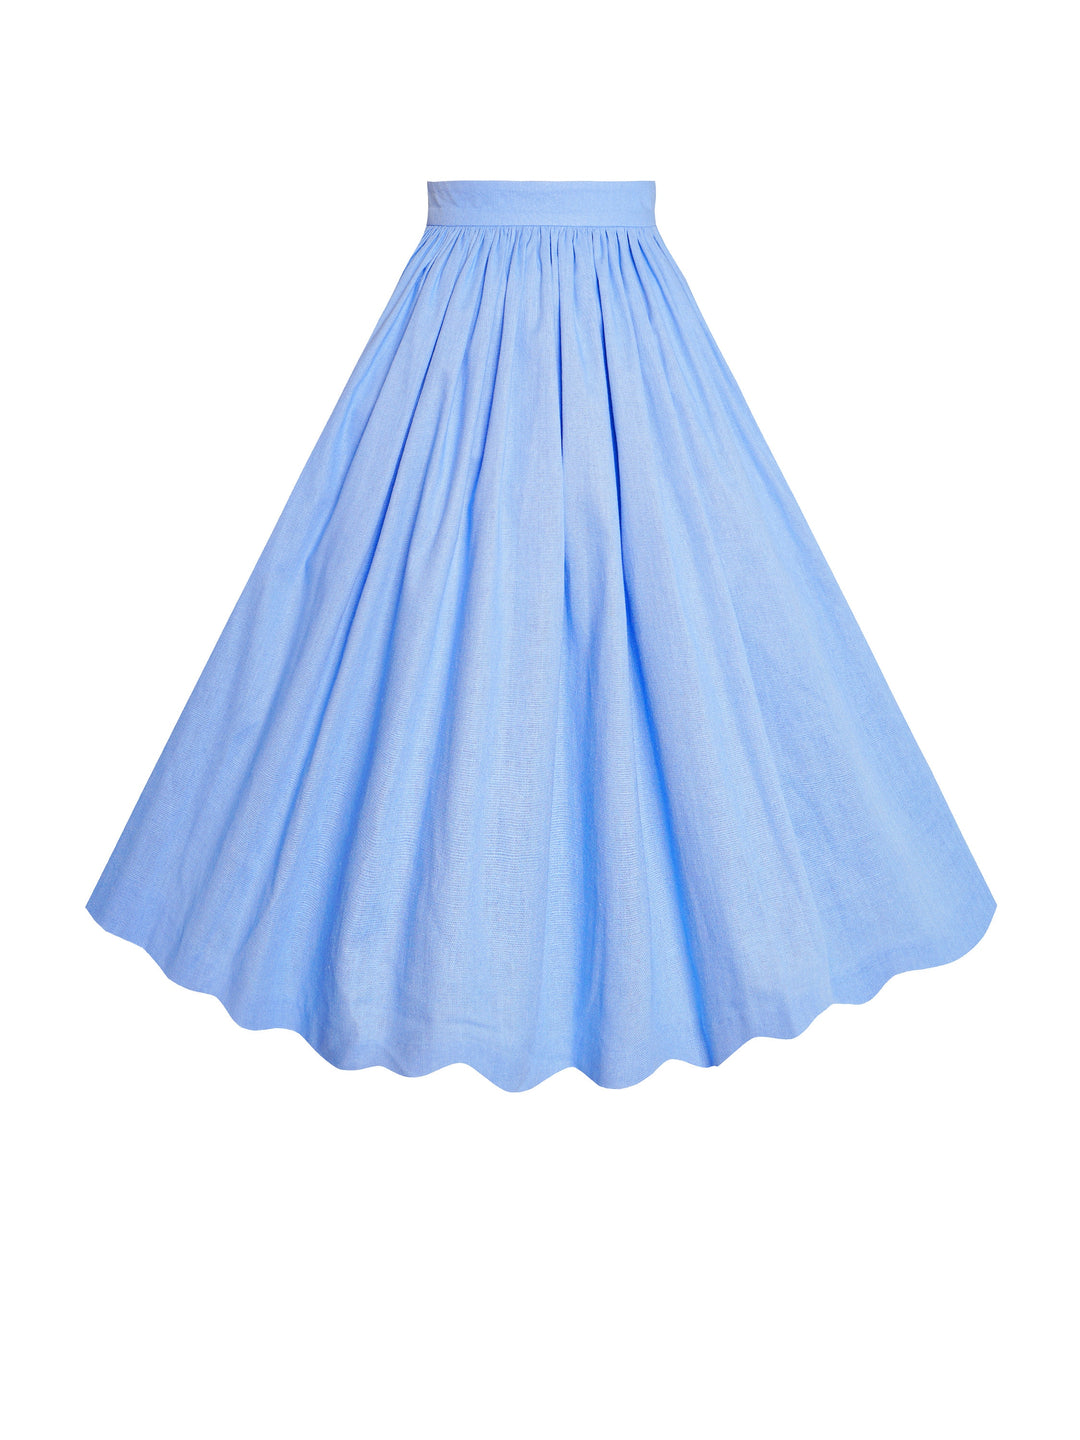 MTO - Lola Skirt in Powder Blue Linen